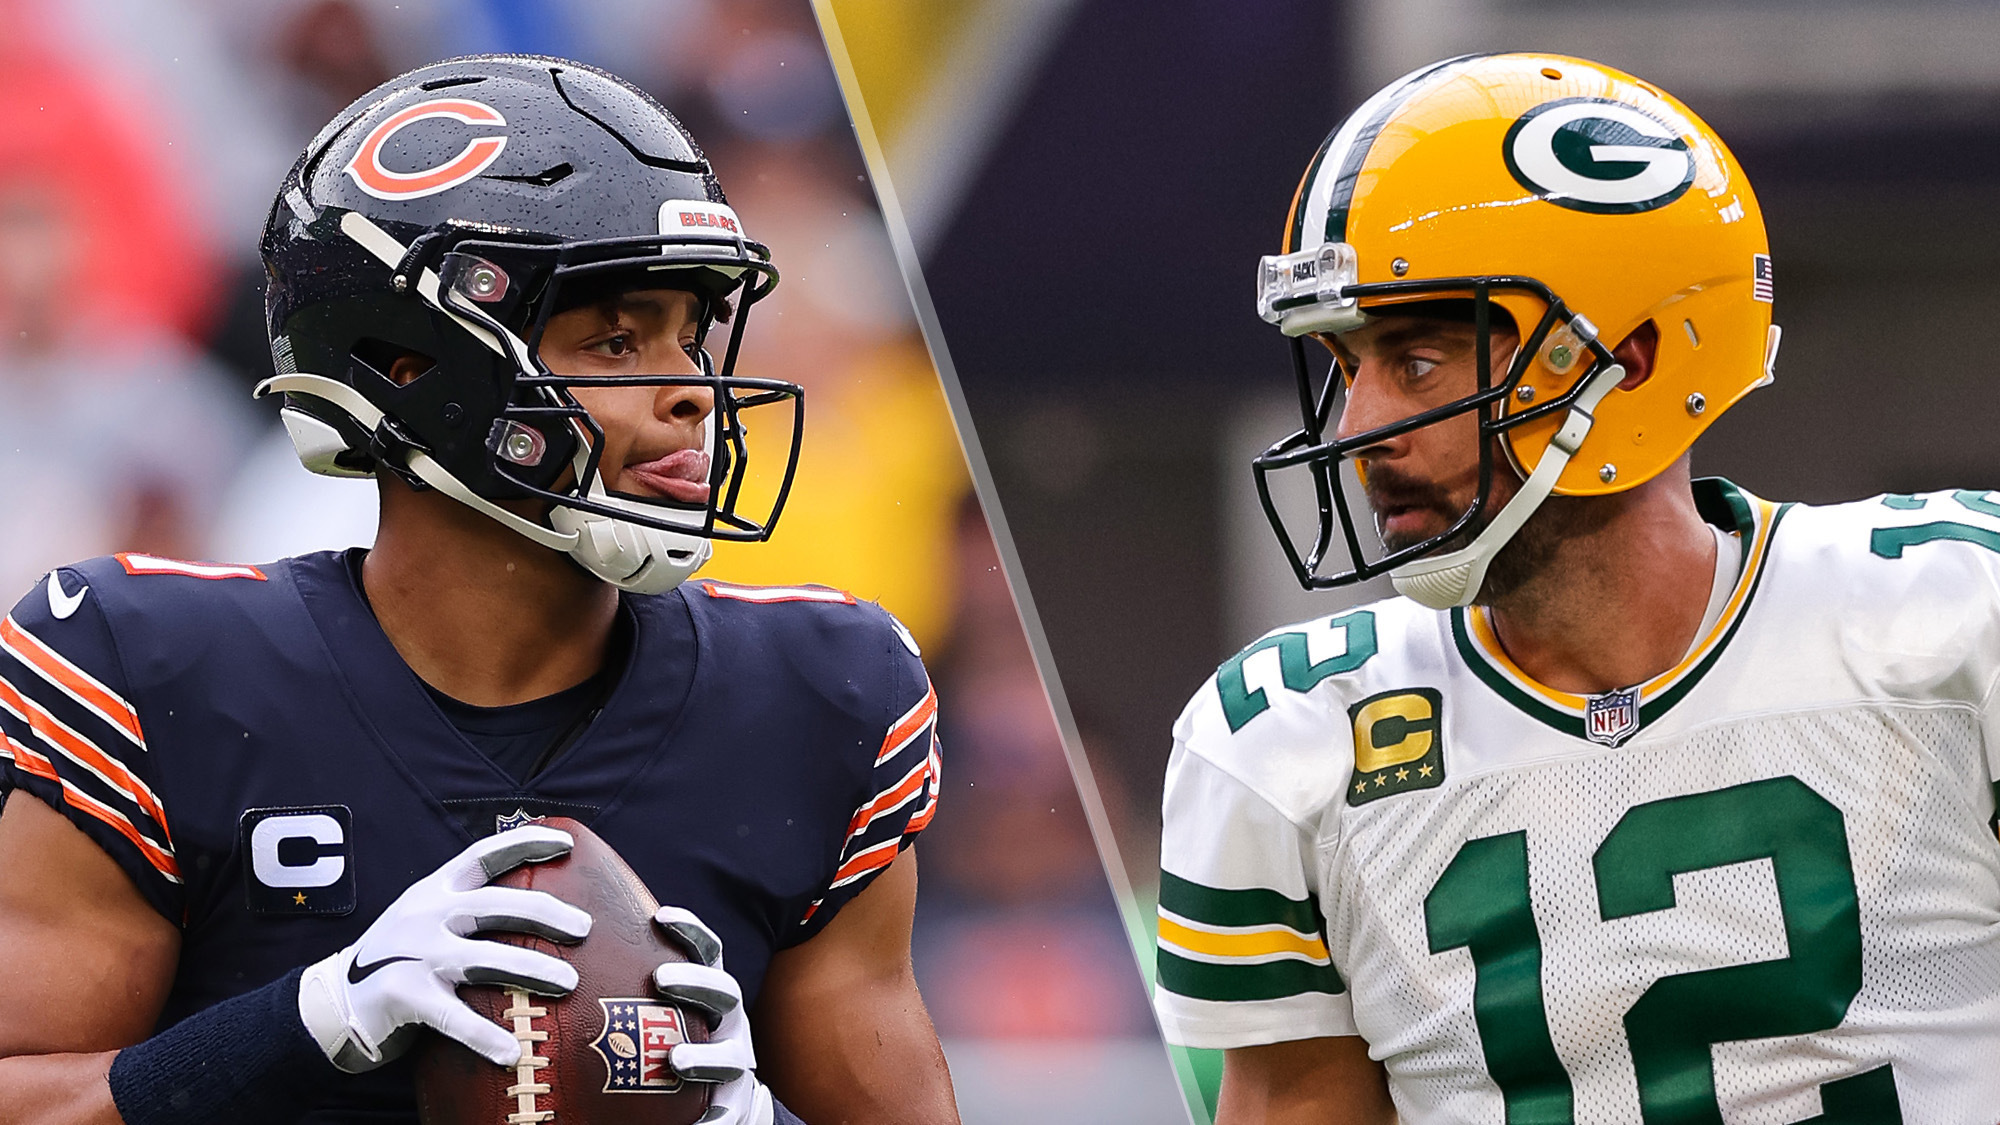 Bears vs Packers live stream: How to watch Sunday Night Football